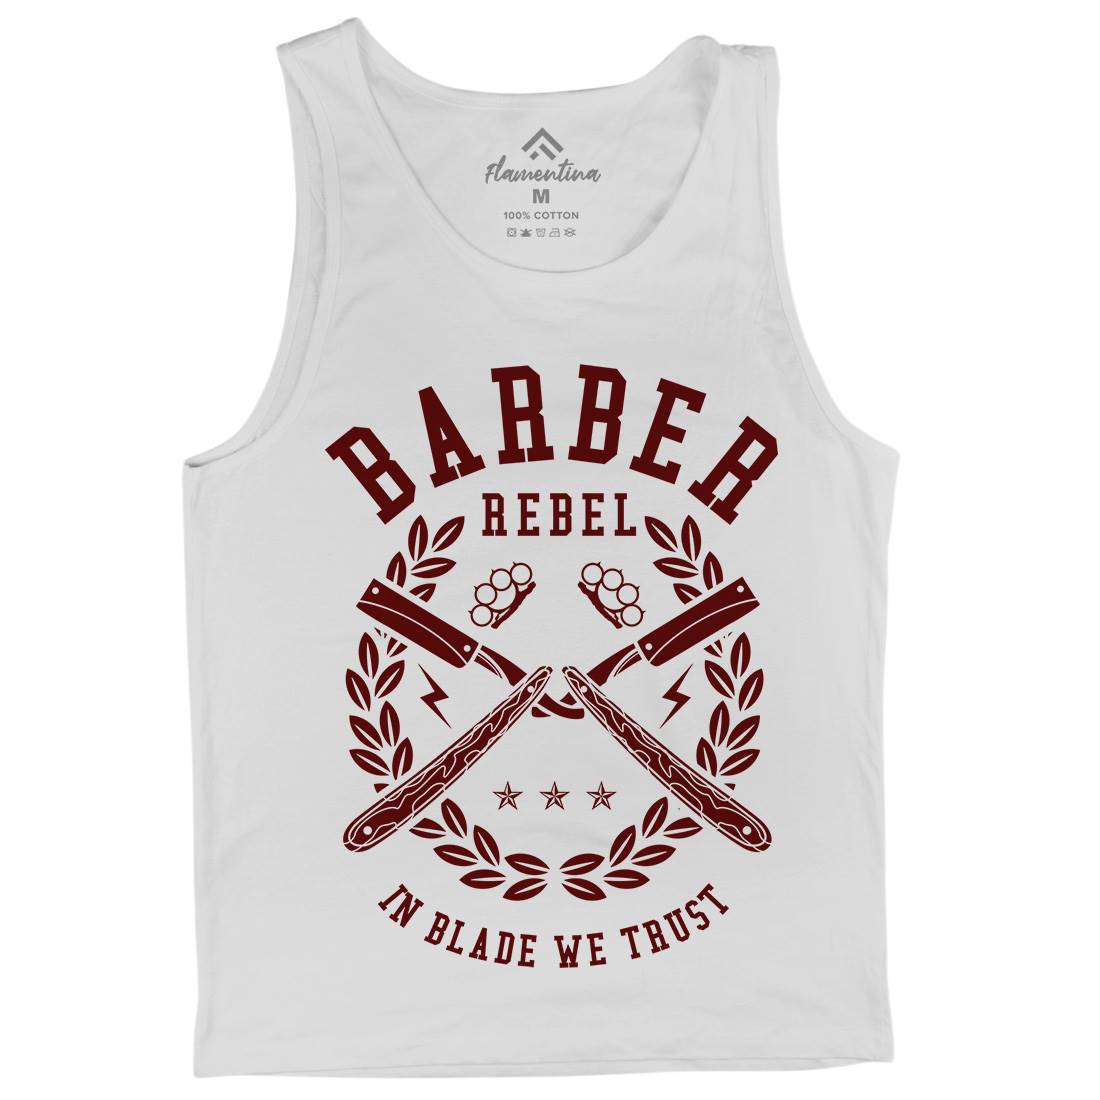 Rebel Mens Tank Top Vest Barber A203